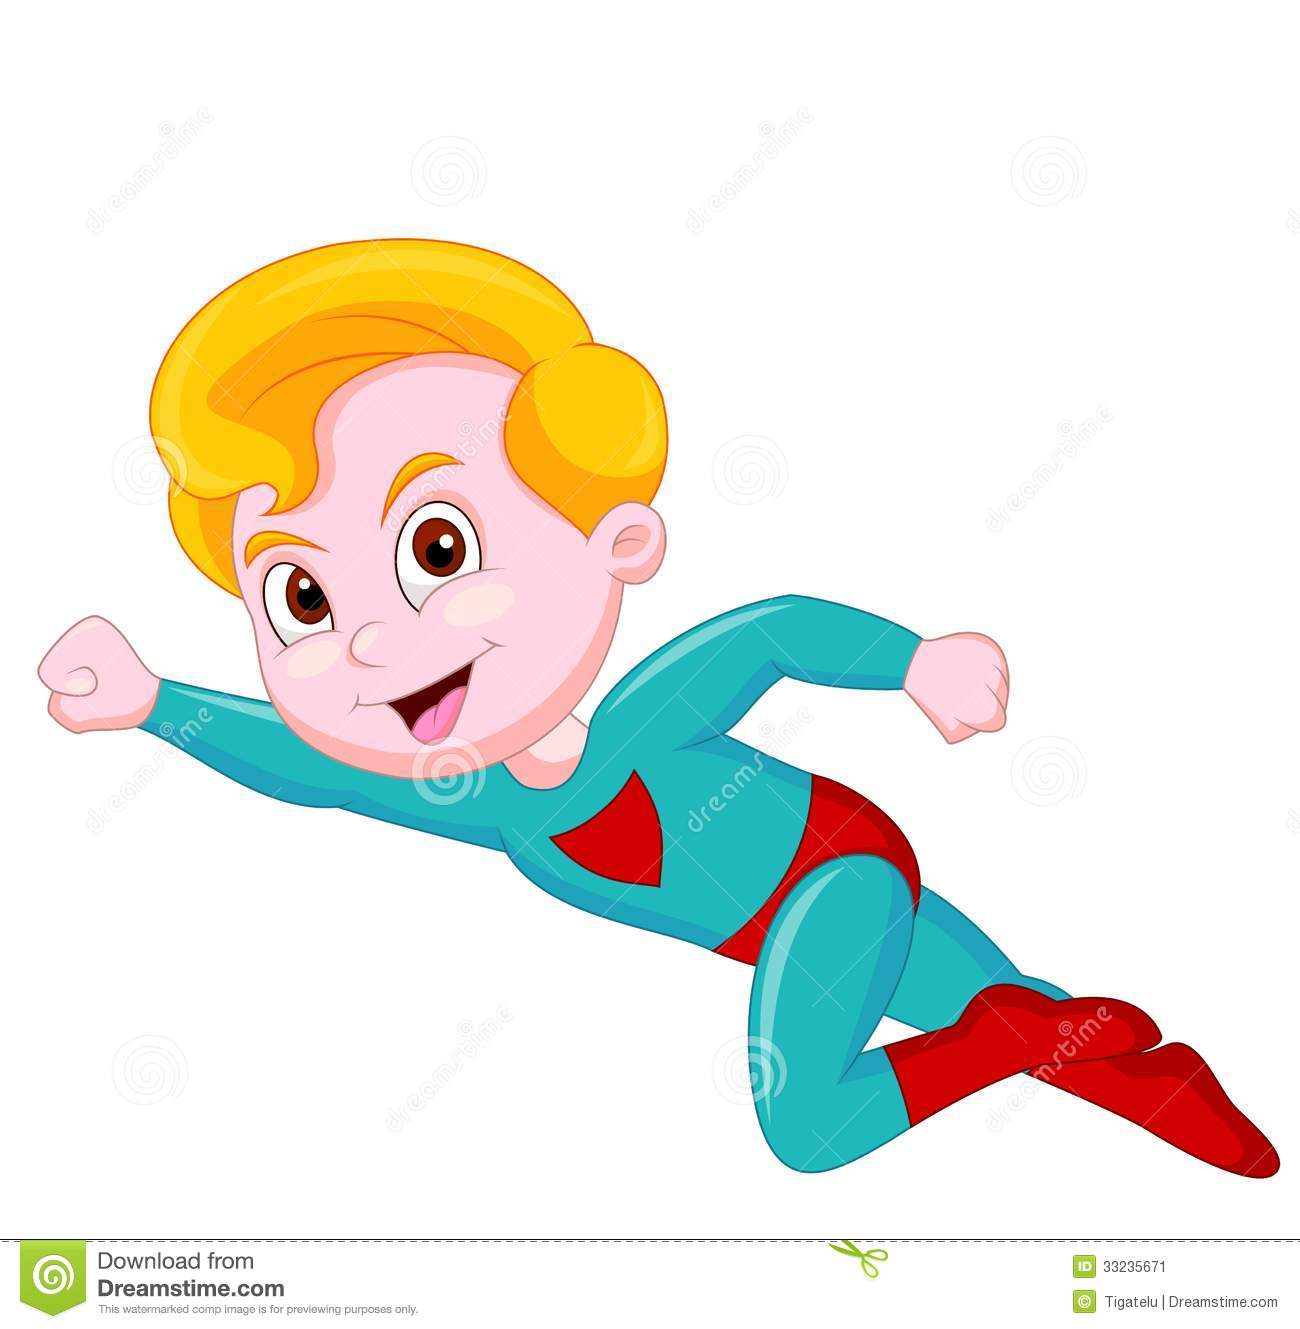 Superhero Kid Cartoon Stock Image   Image  33235671